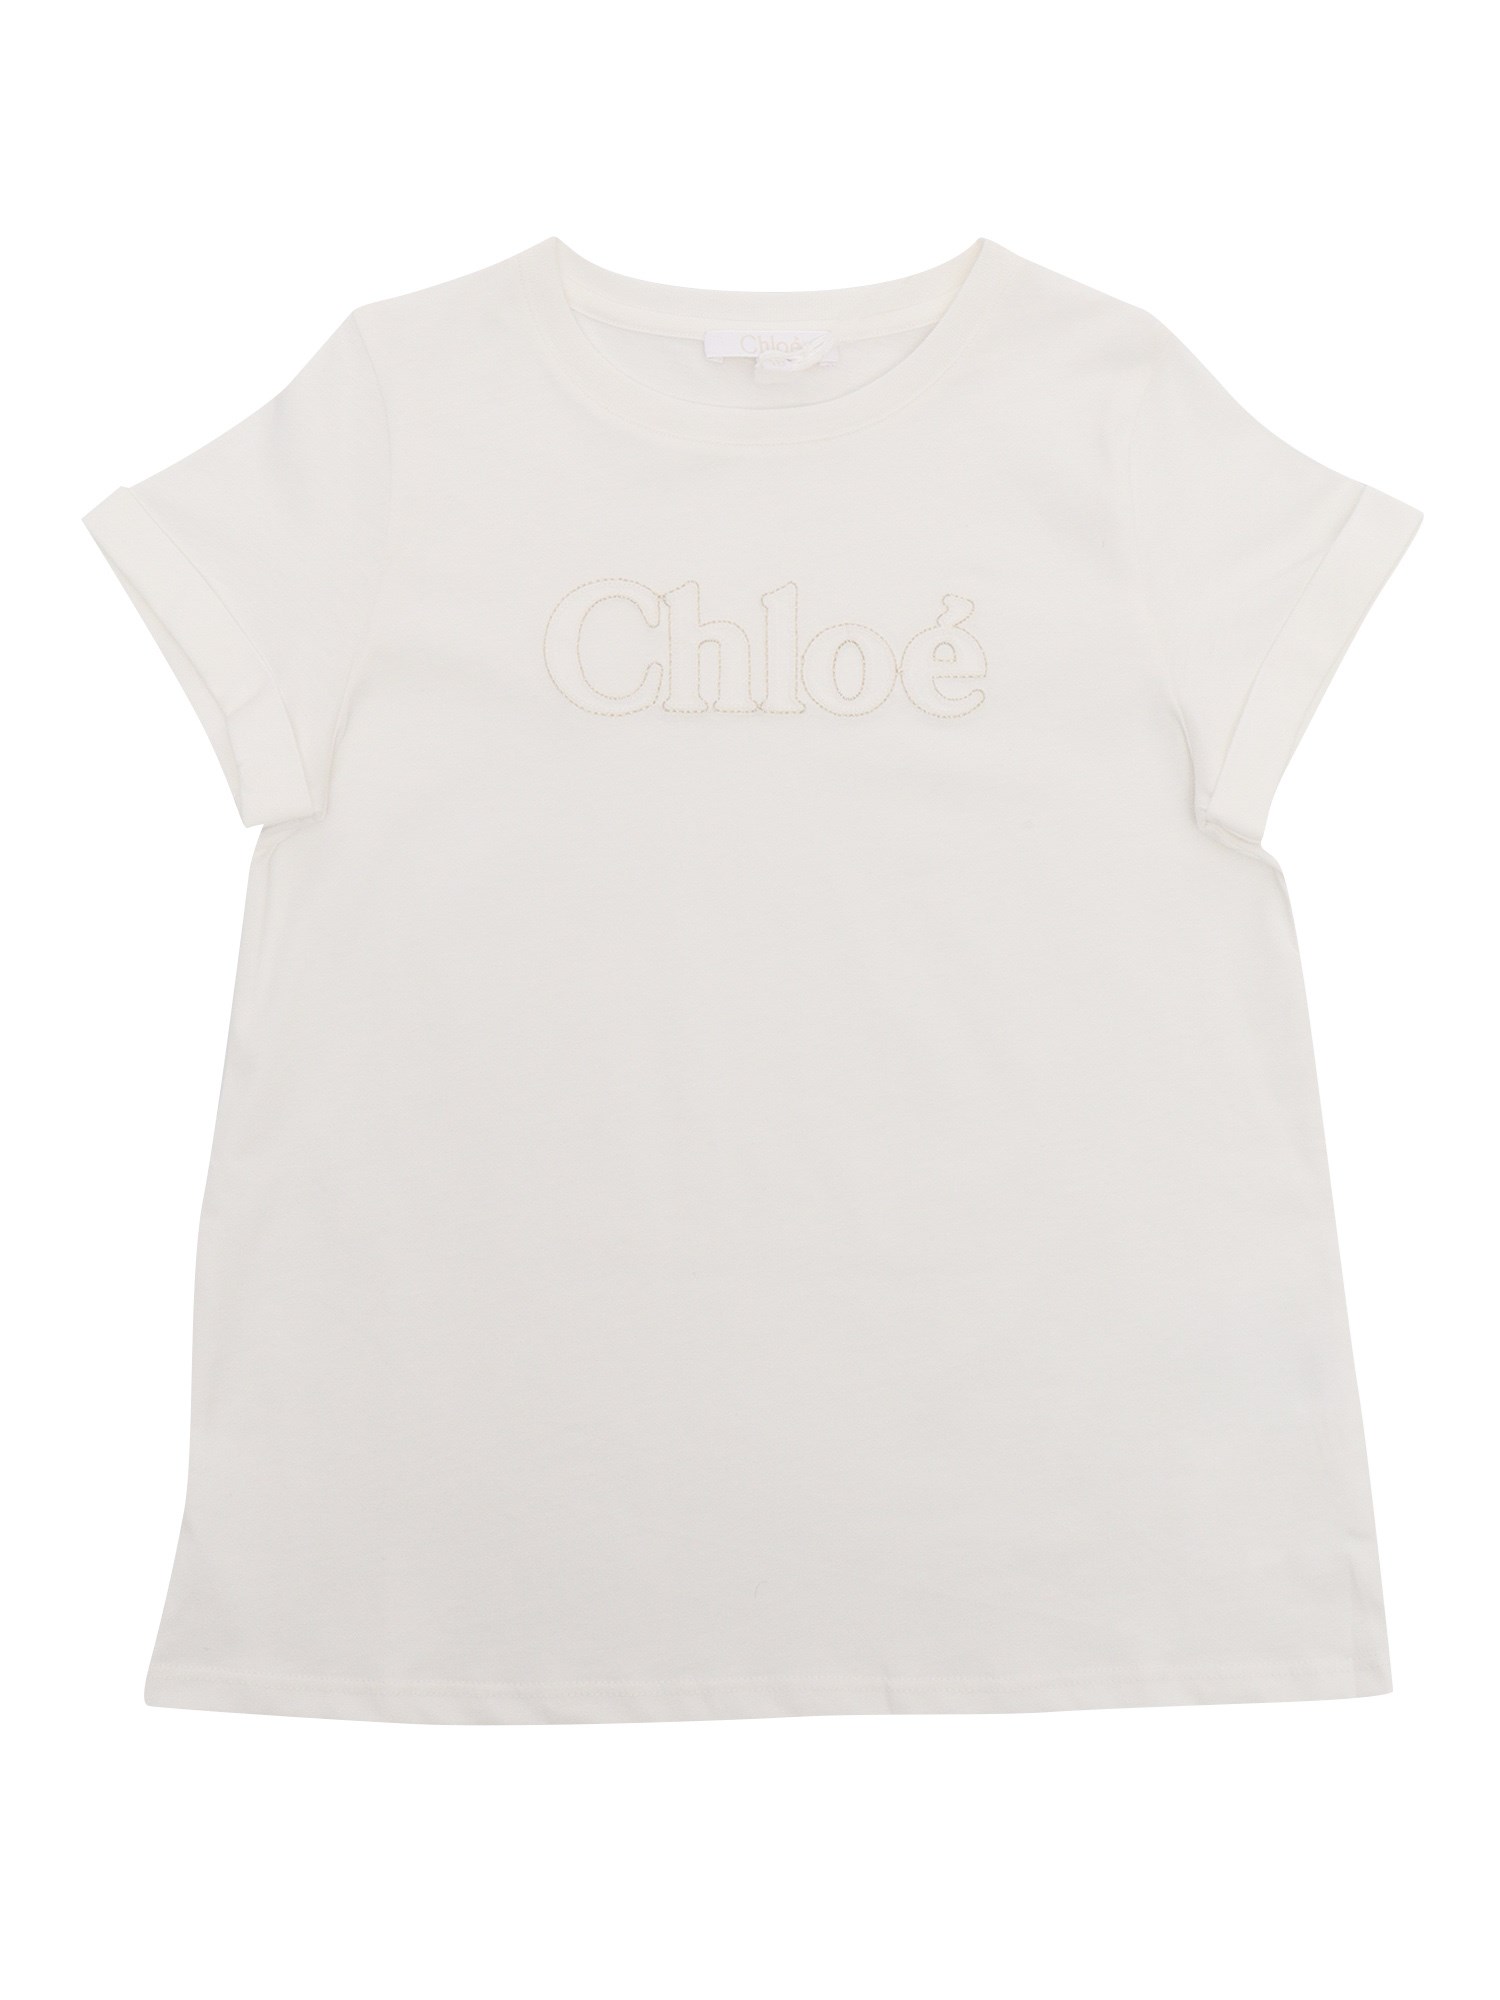 Chloé White T-shirt With Logo